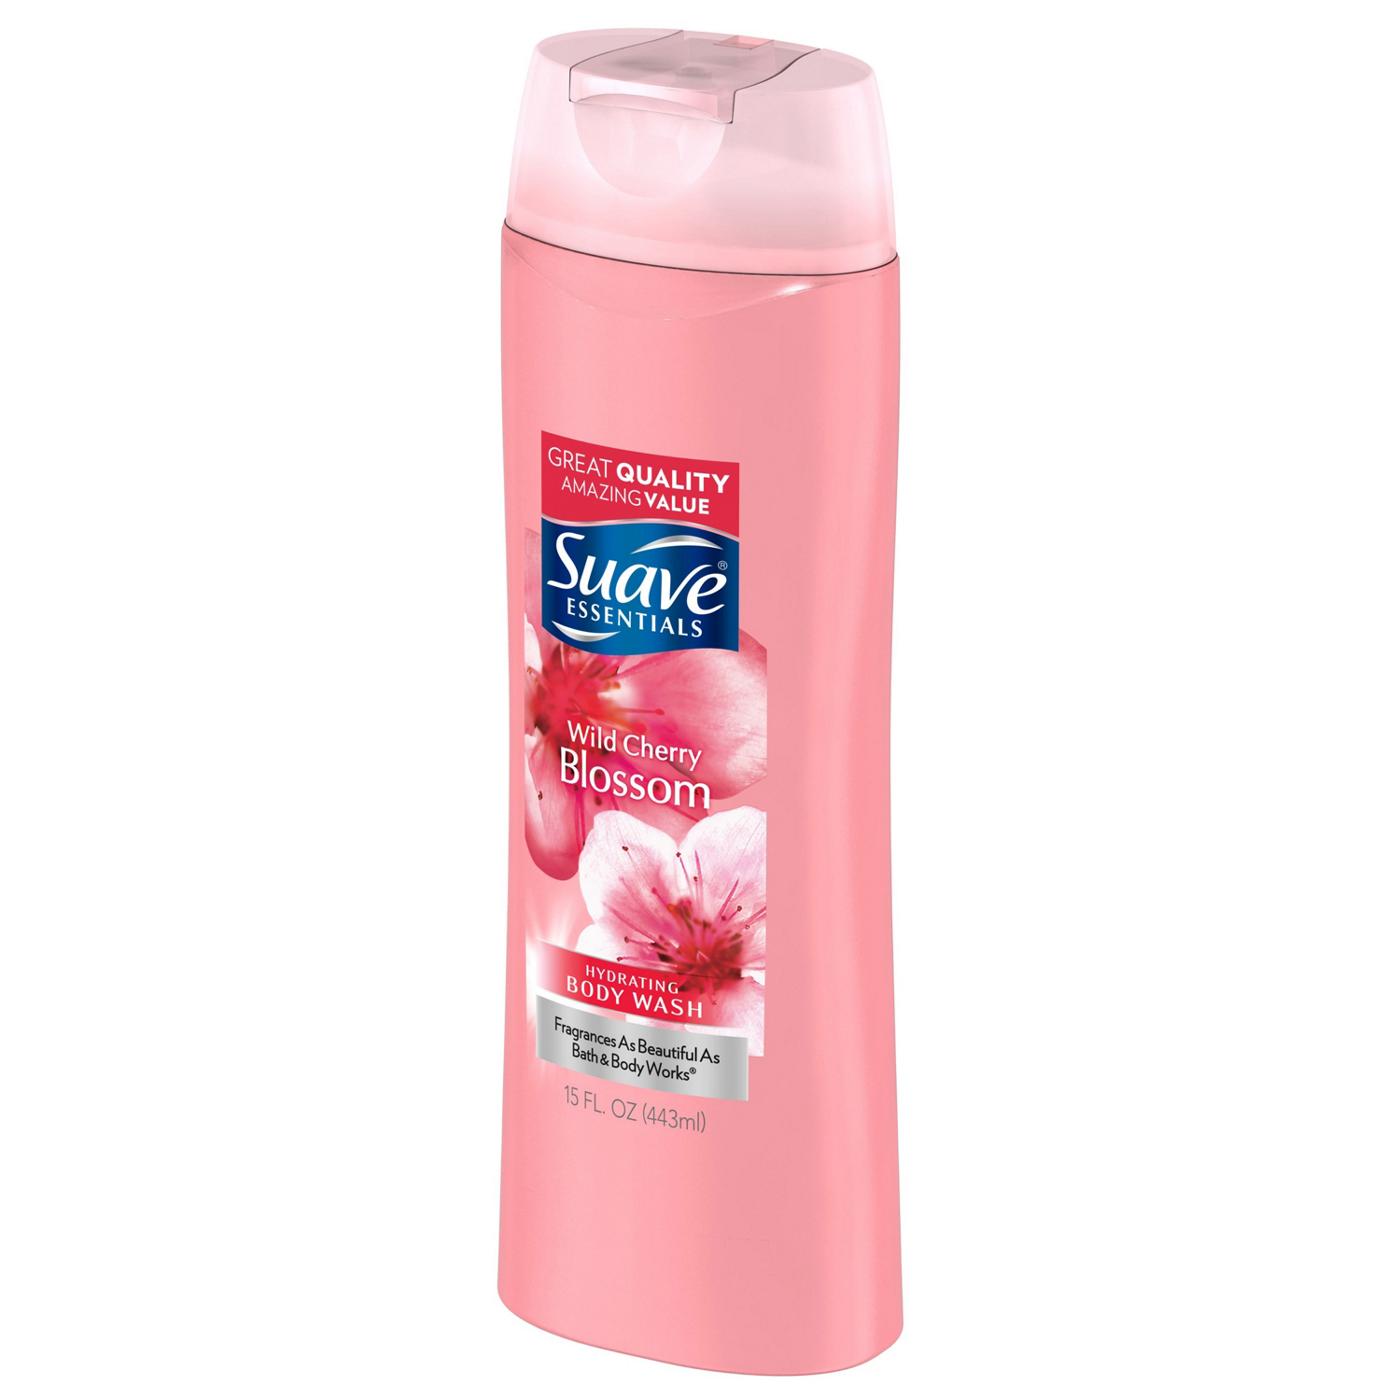 Suave Essentials Body Wash Wild Cherry Blossom; image 2 of 4